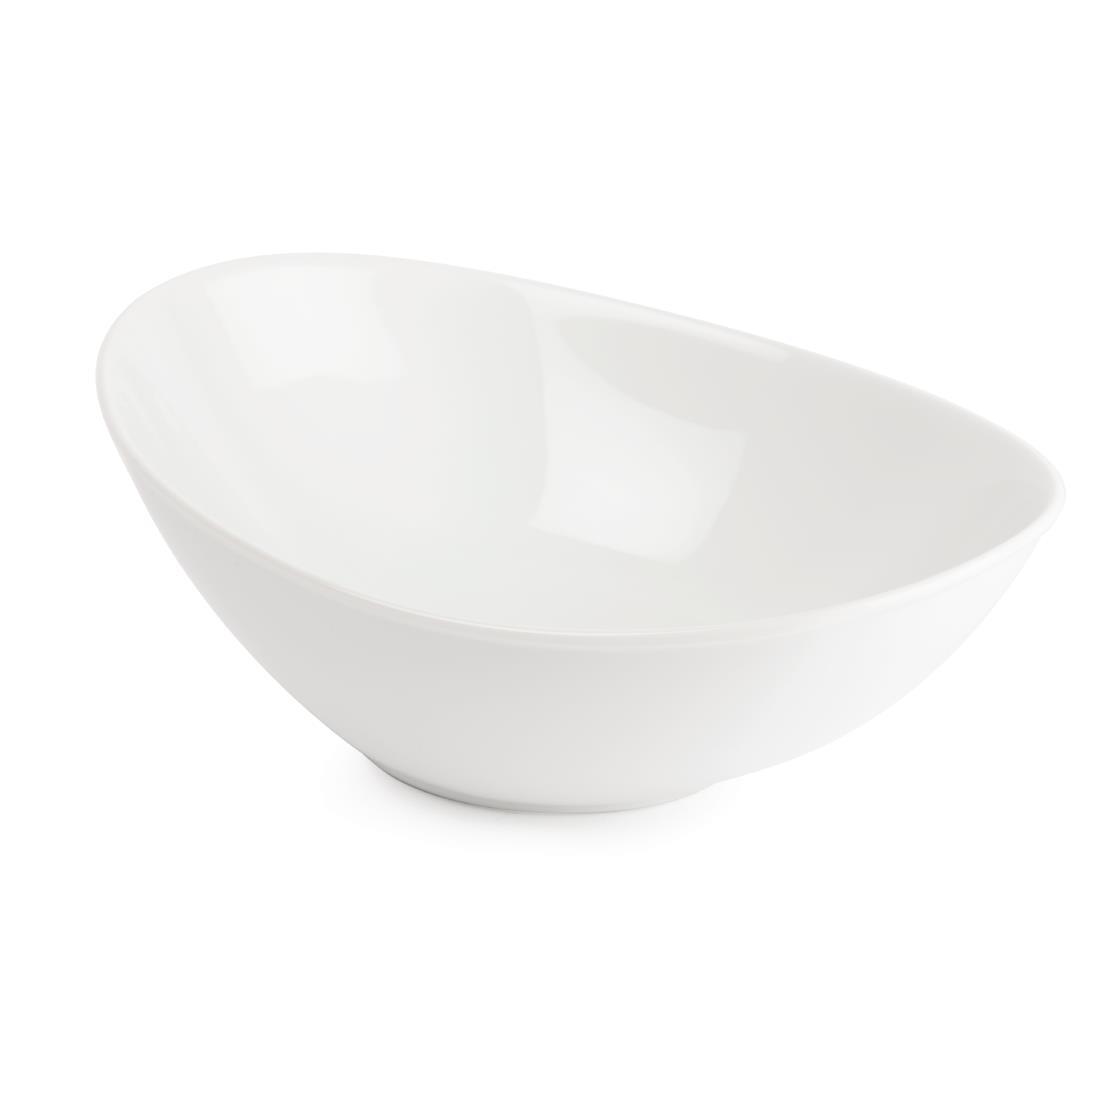 Royal Porcelain Classic White Salad Bowls 200mm (Pack of 6) - CG060  - 2